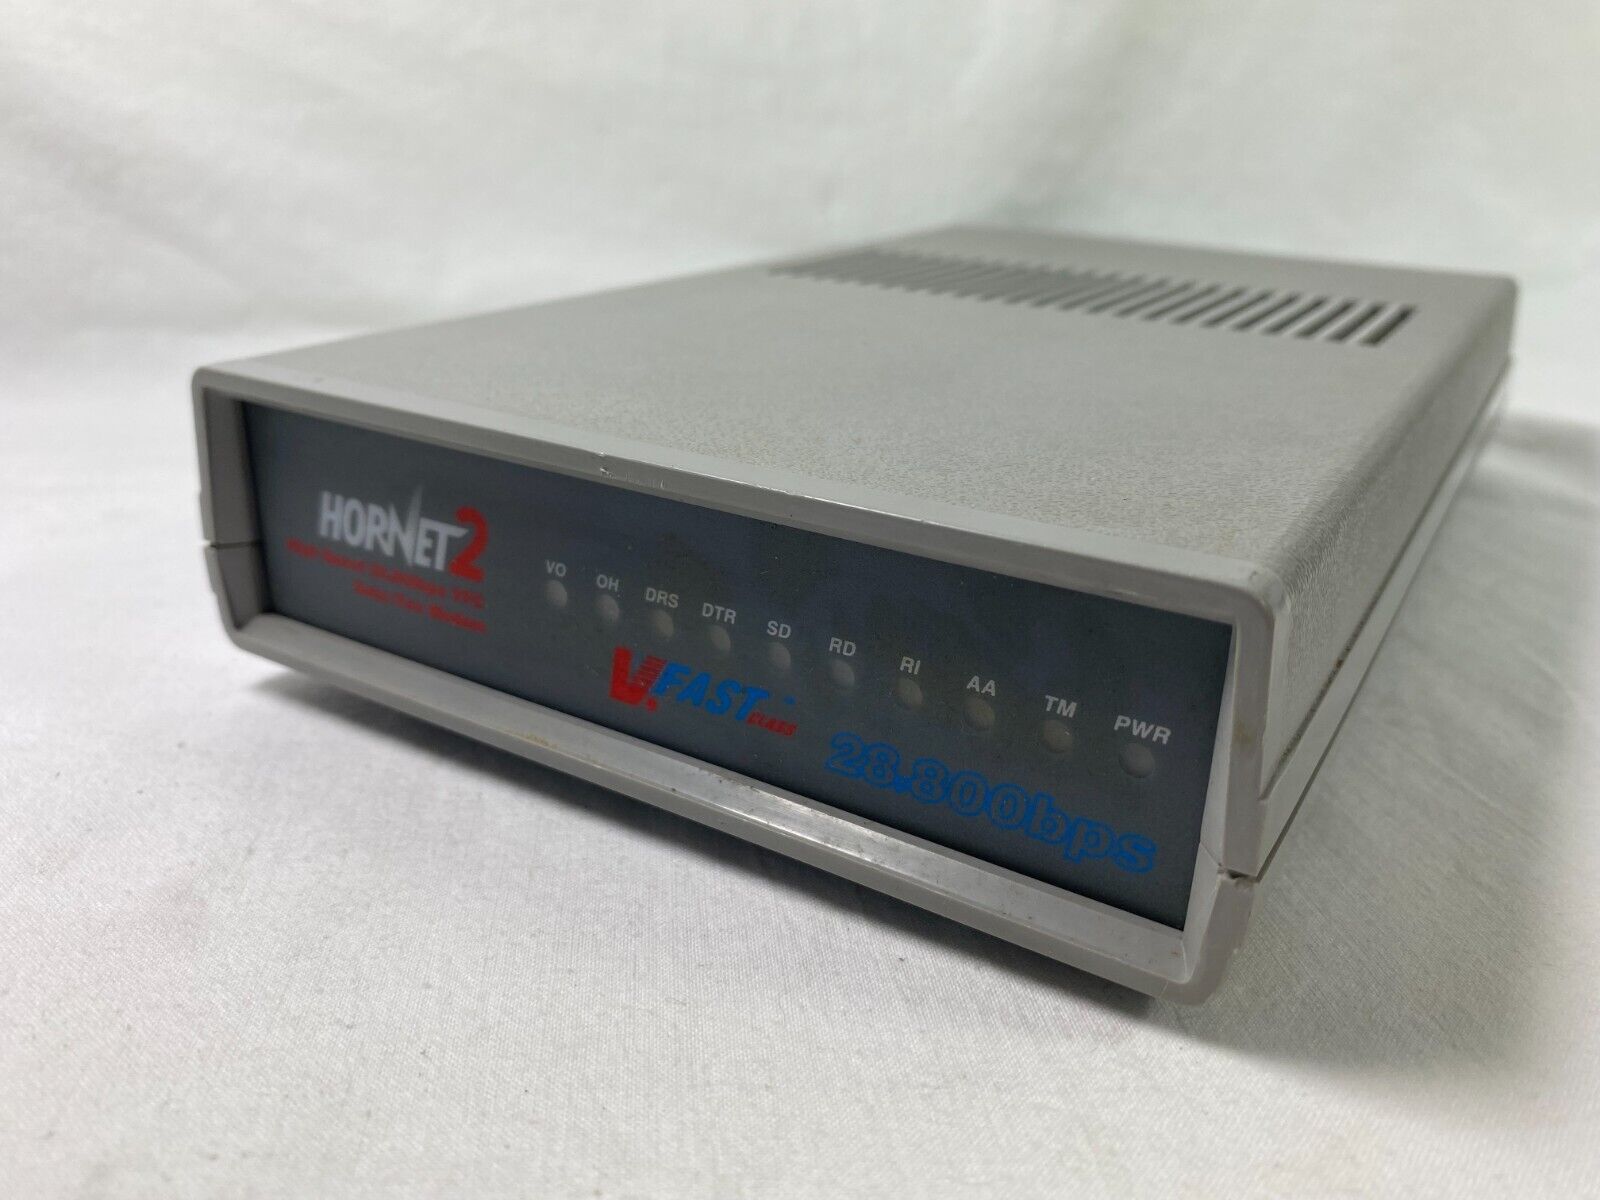 Vintage Hornet2 28.8 external data modem serial IBM PC - No cables/Untested